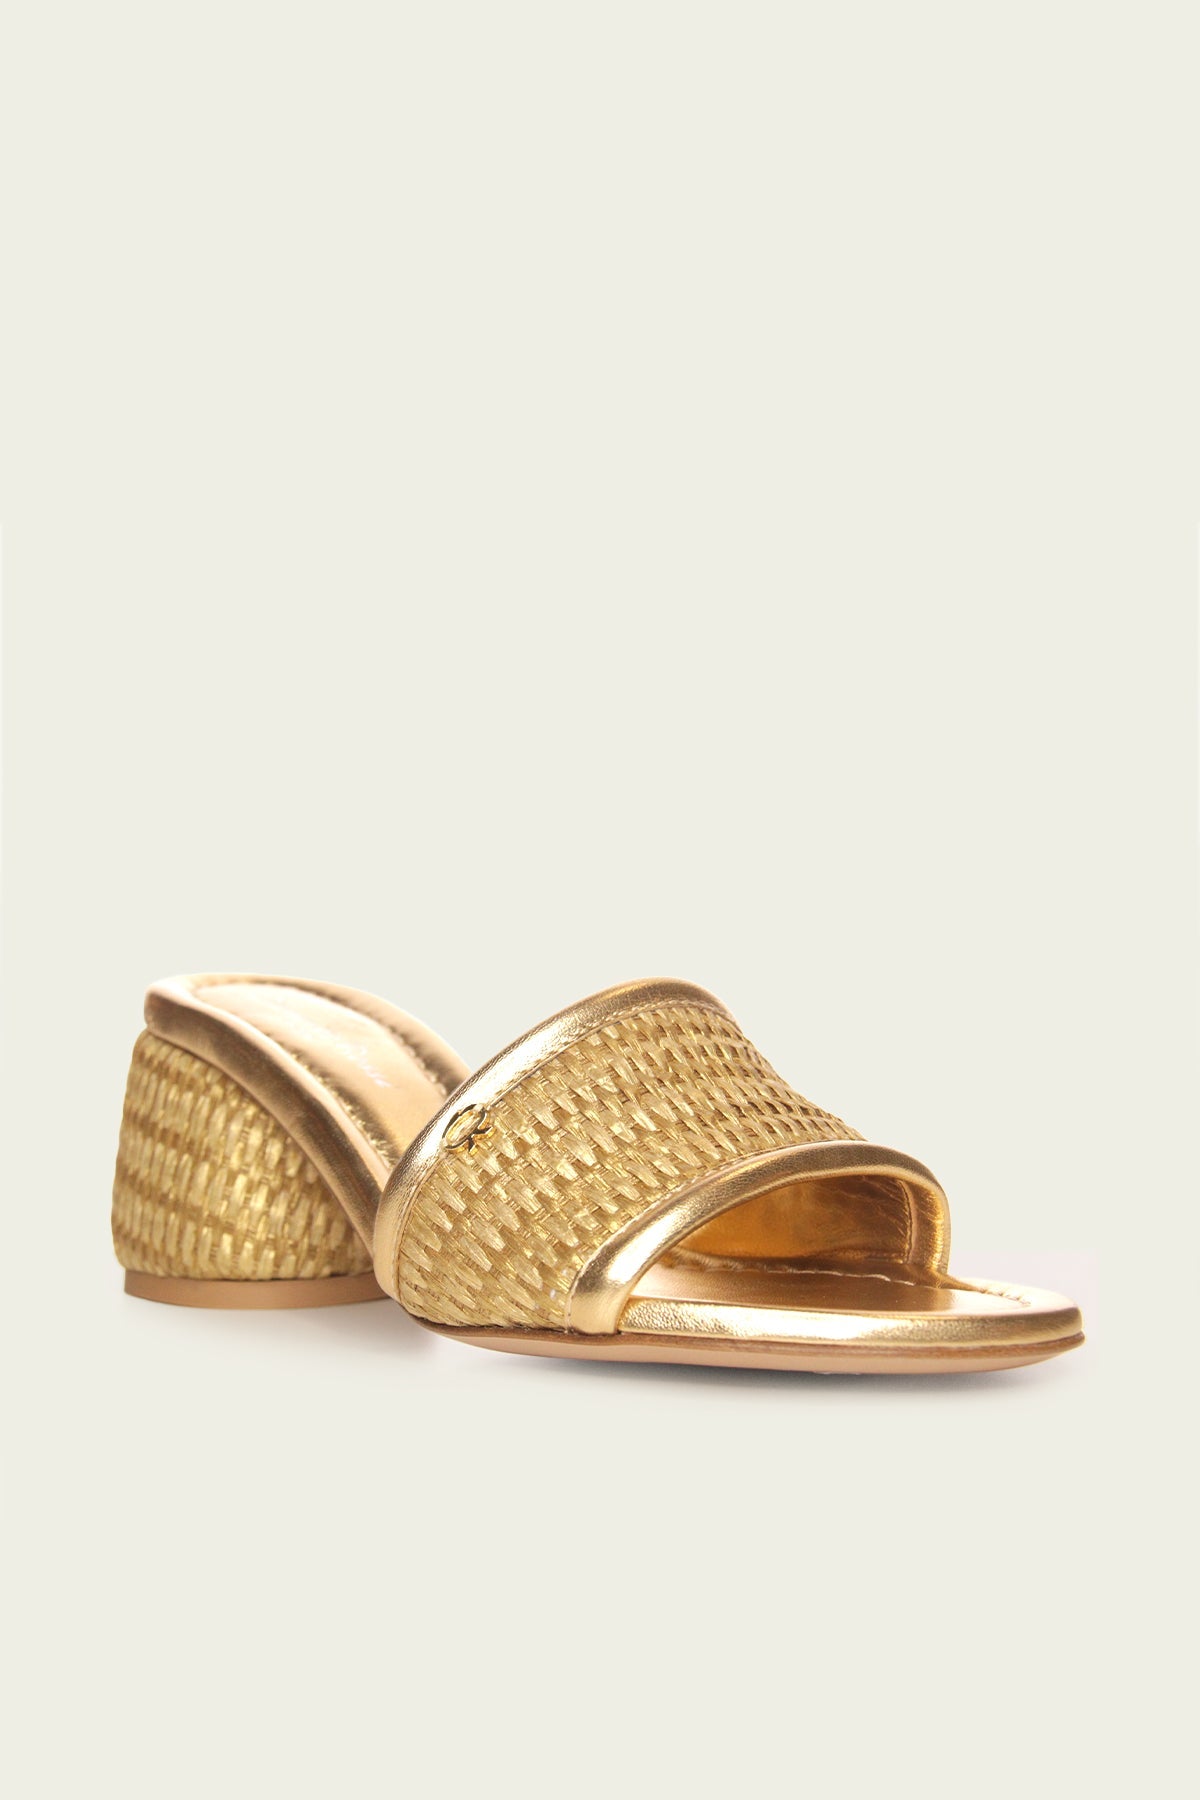 Marbella Metallic Raffia Block Slide Sandals in Gold - shop-olivia.com